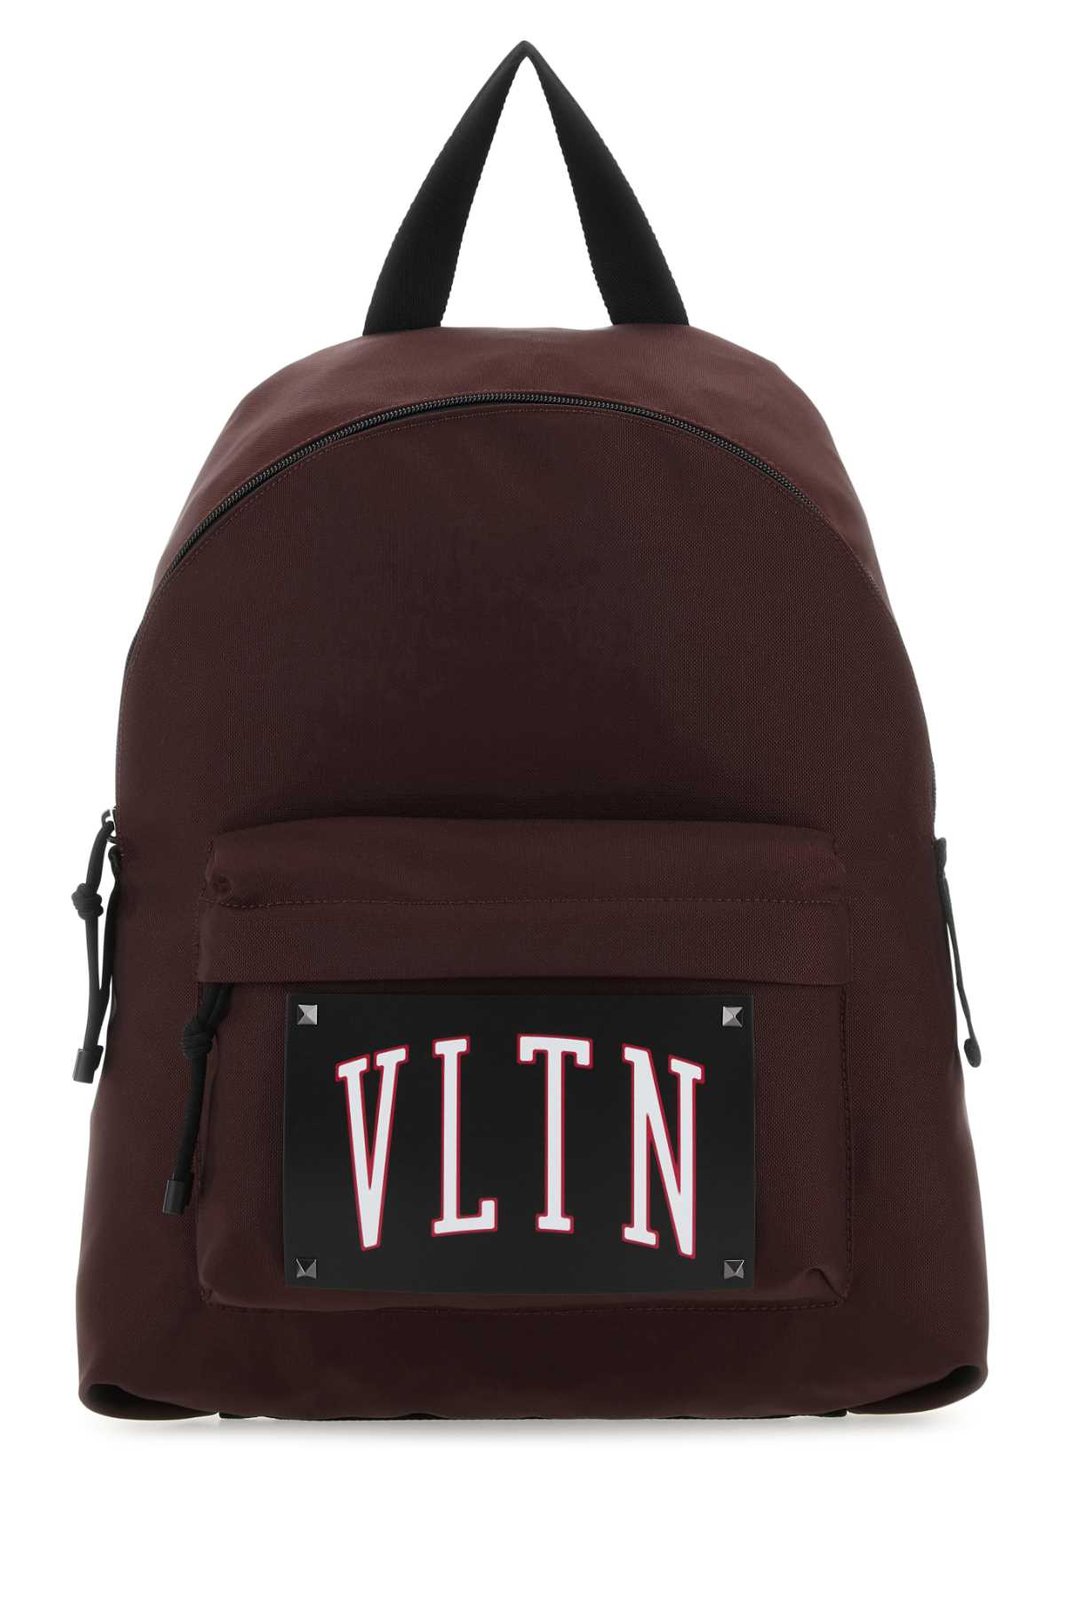 Valentino VLTN 로고 패치 집업 백팩